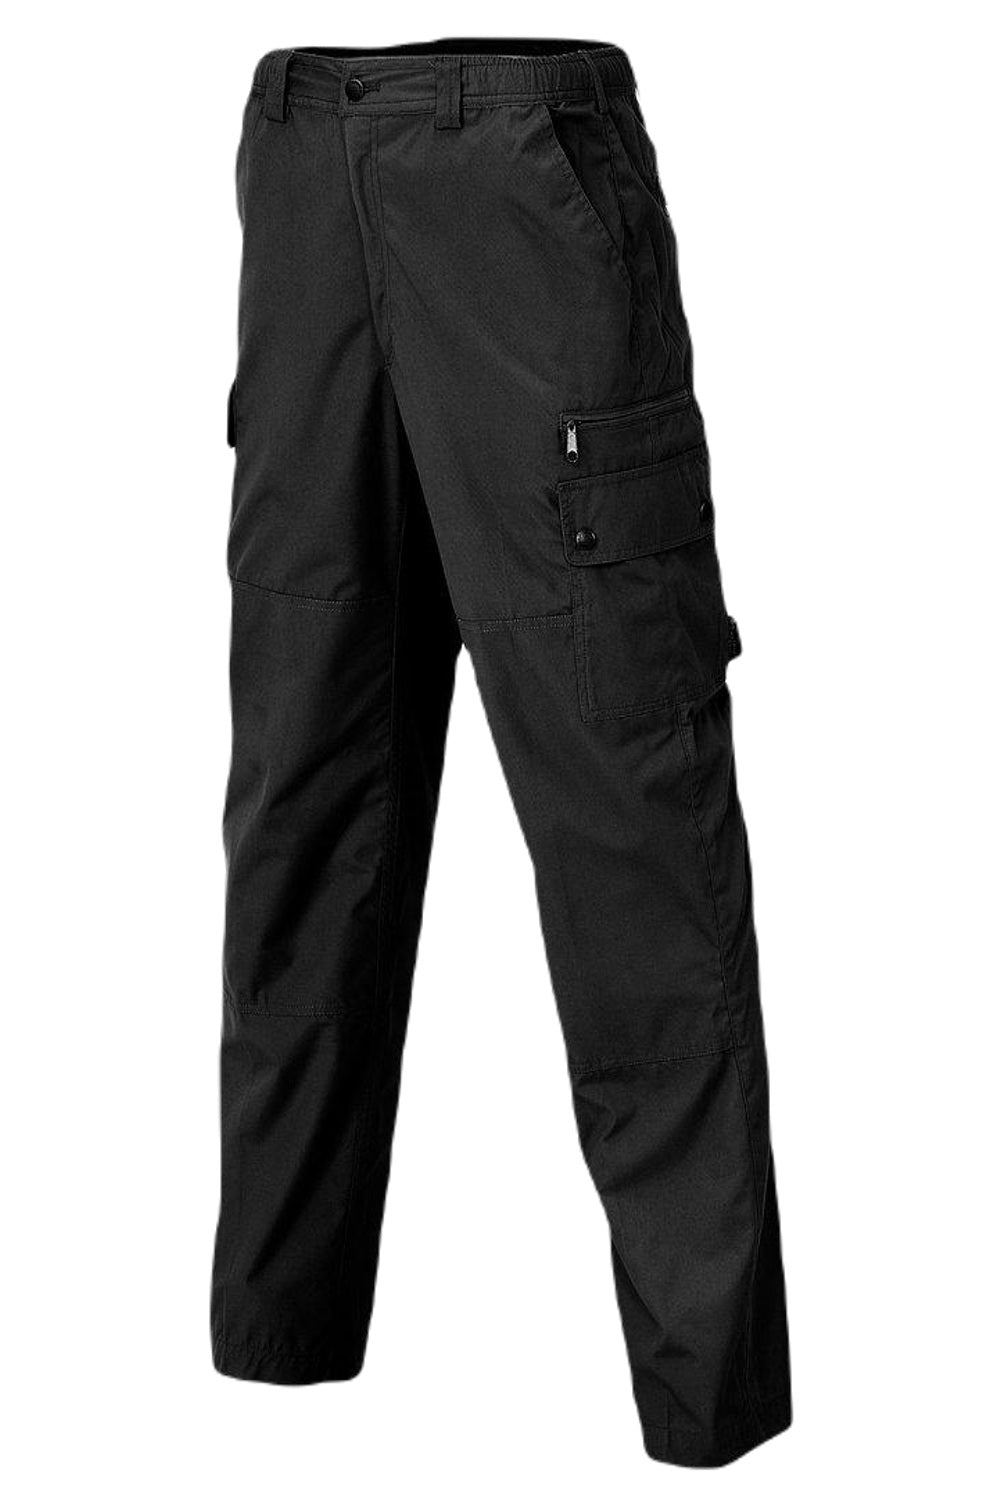 Pinewood Mens Finnveden Winter Trousers in Black 